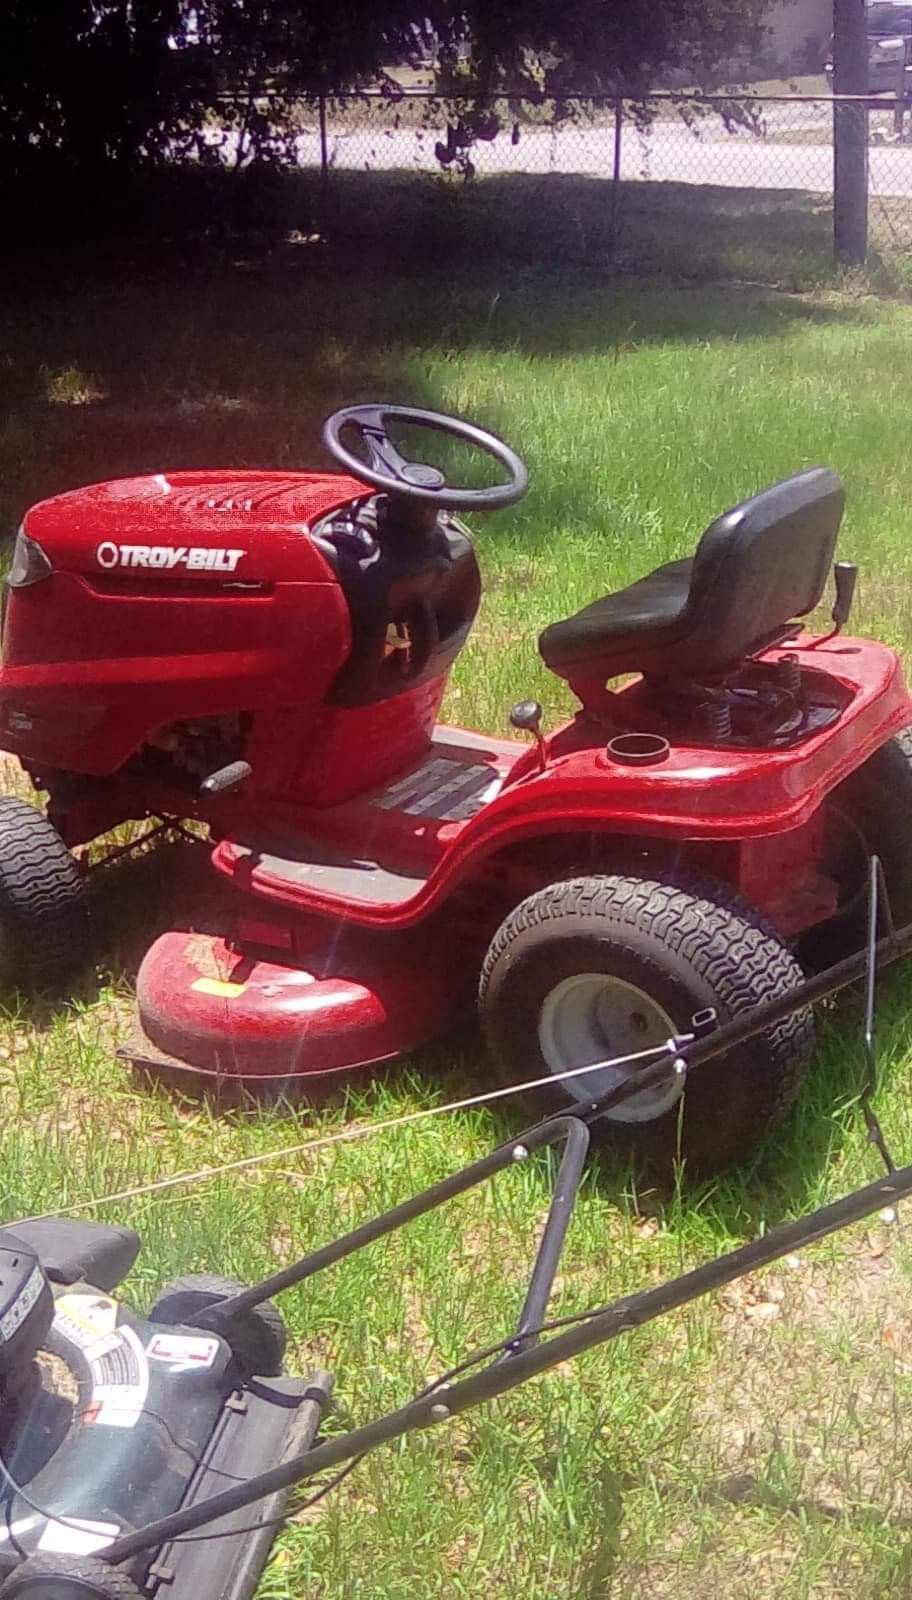 Troy Bilt Riding Lawn Mower